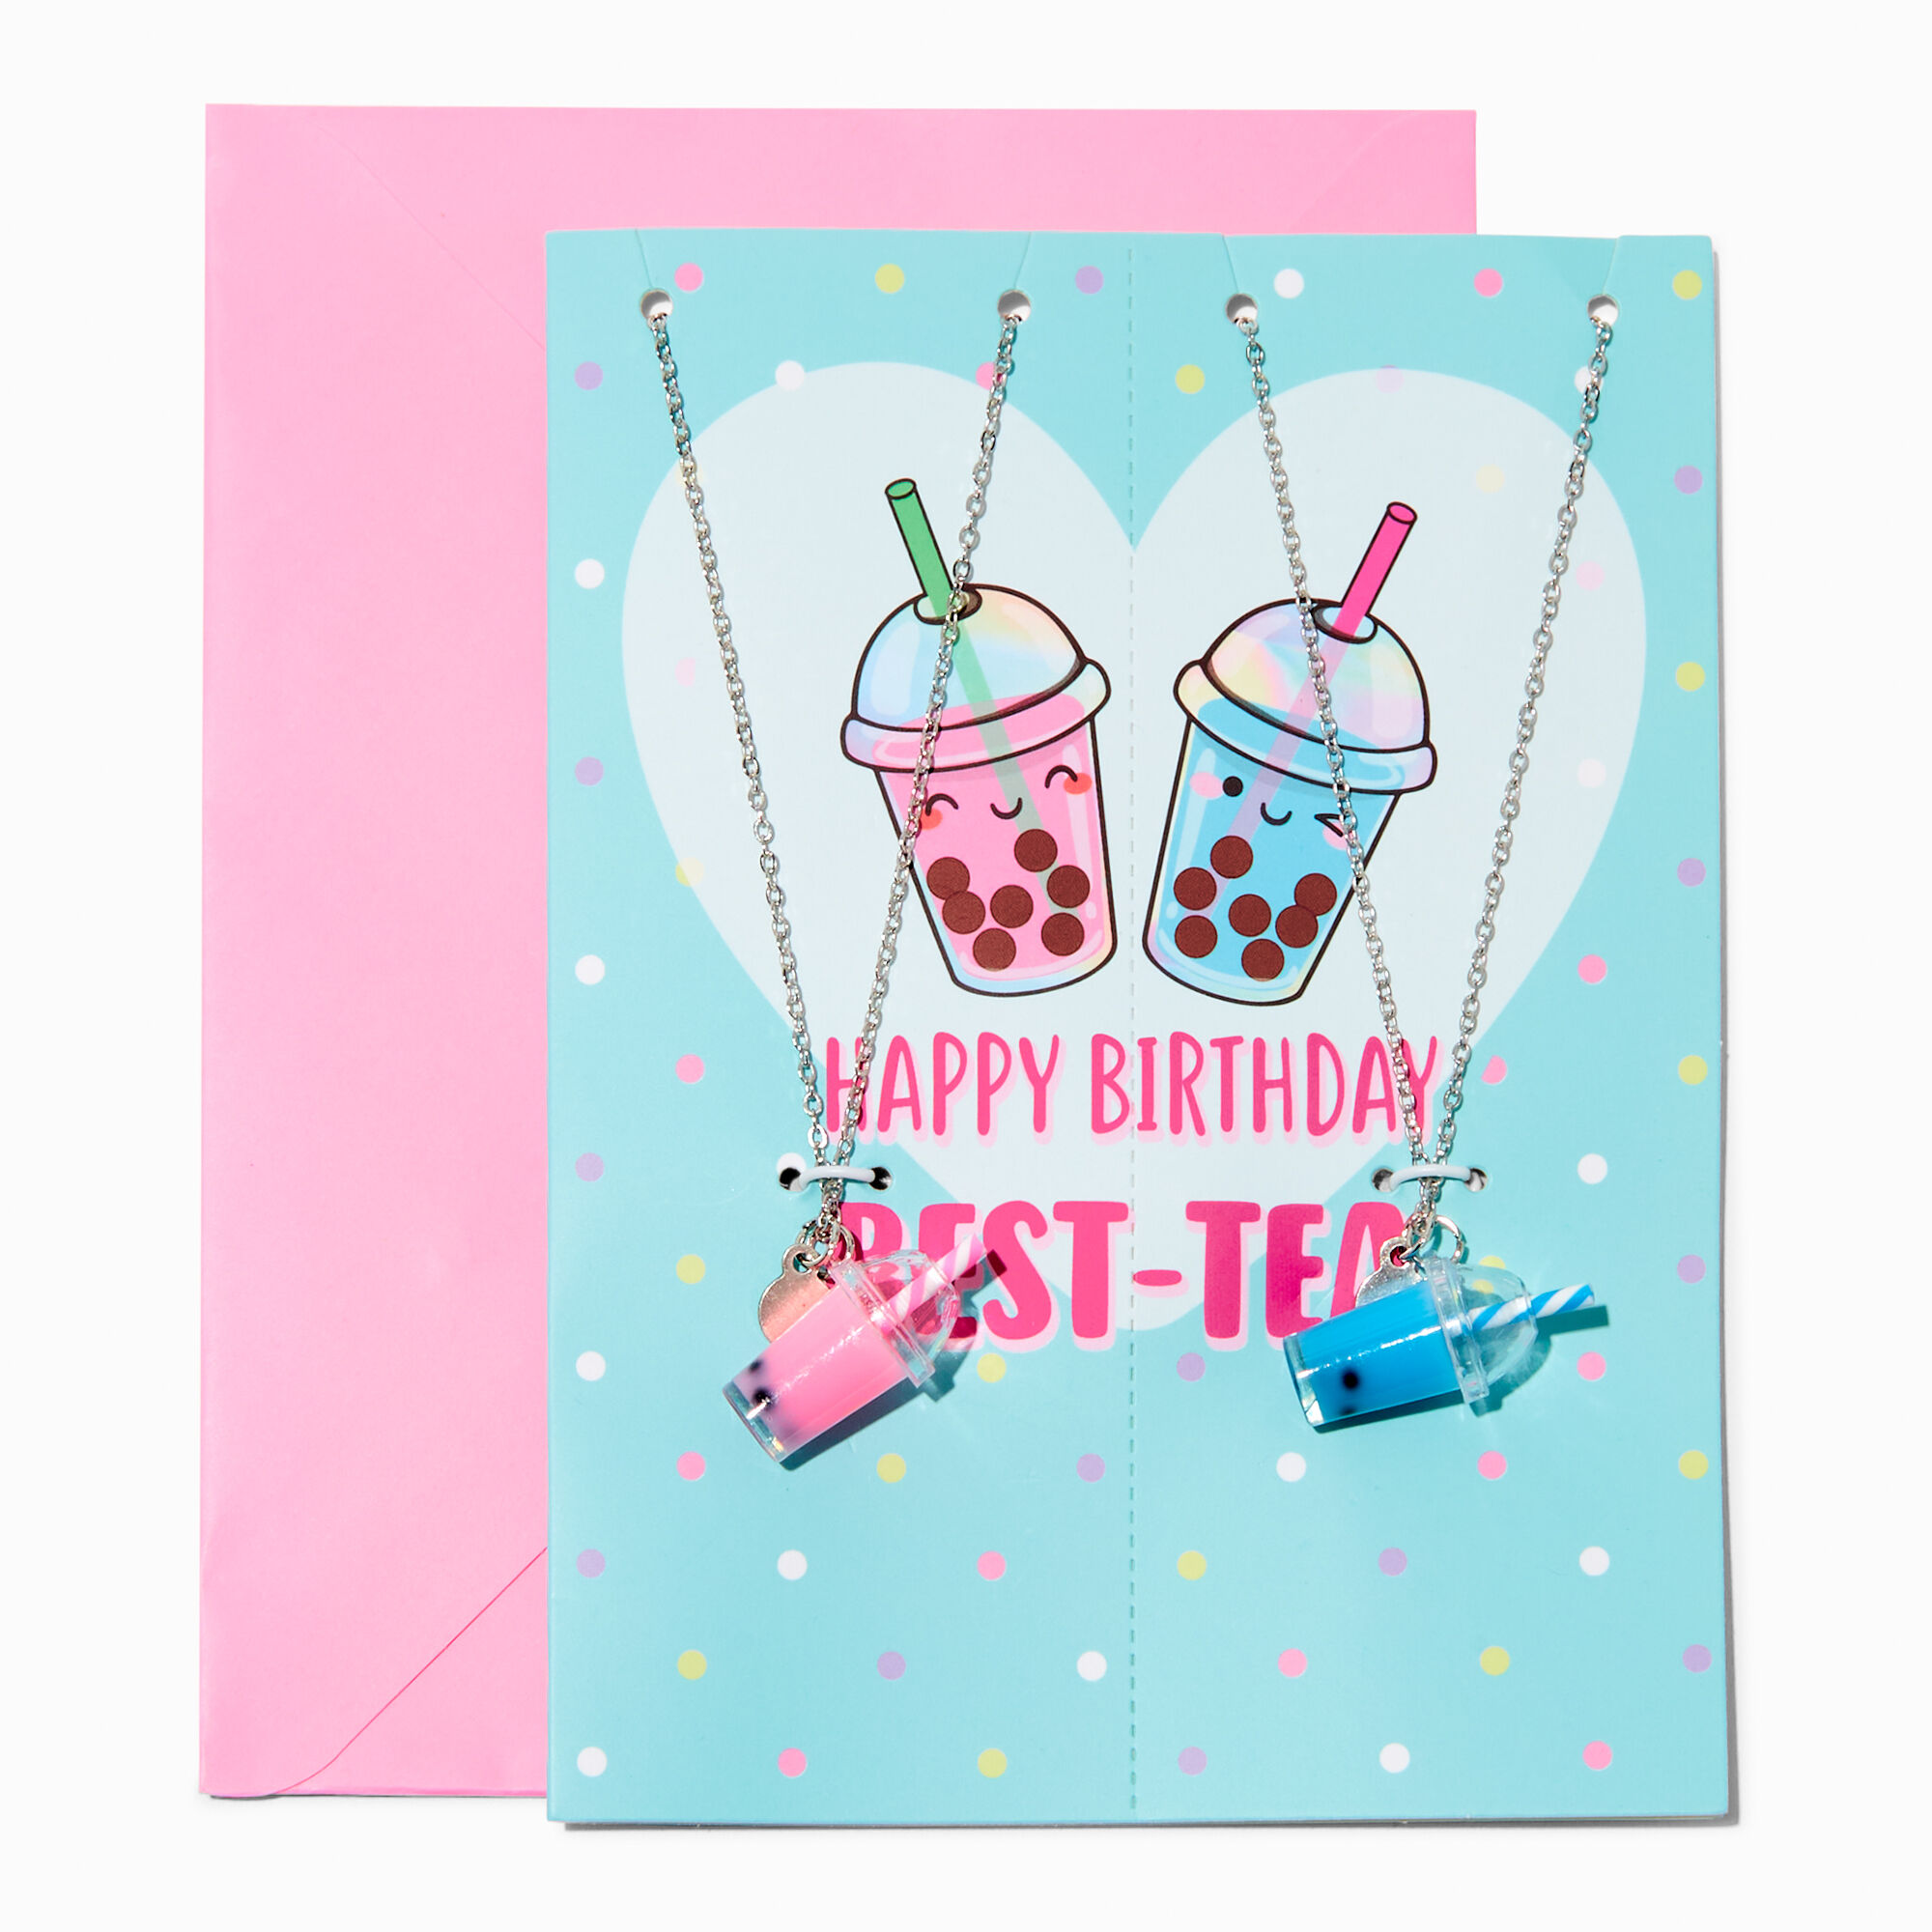 View Claires Birthday Card Best Friends Bubble Tea Pendant Necklace Set 3 Pack Pink information